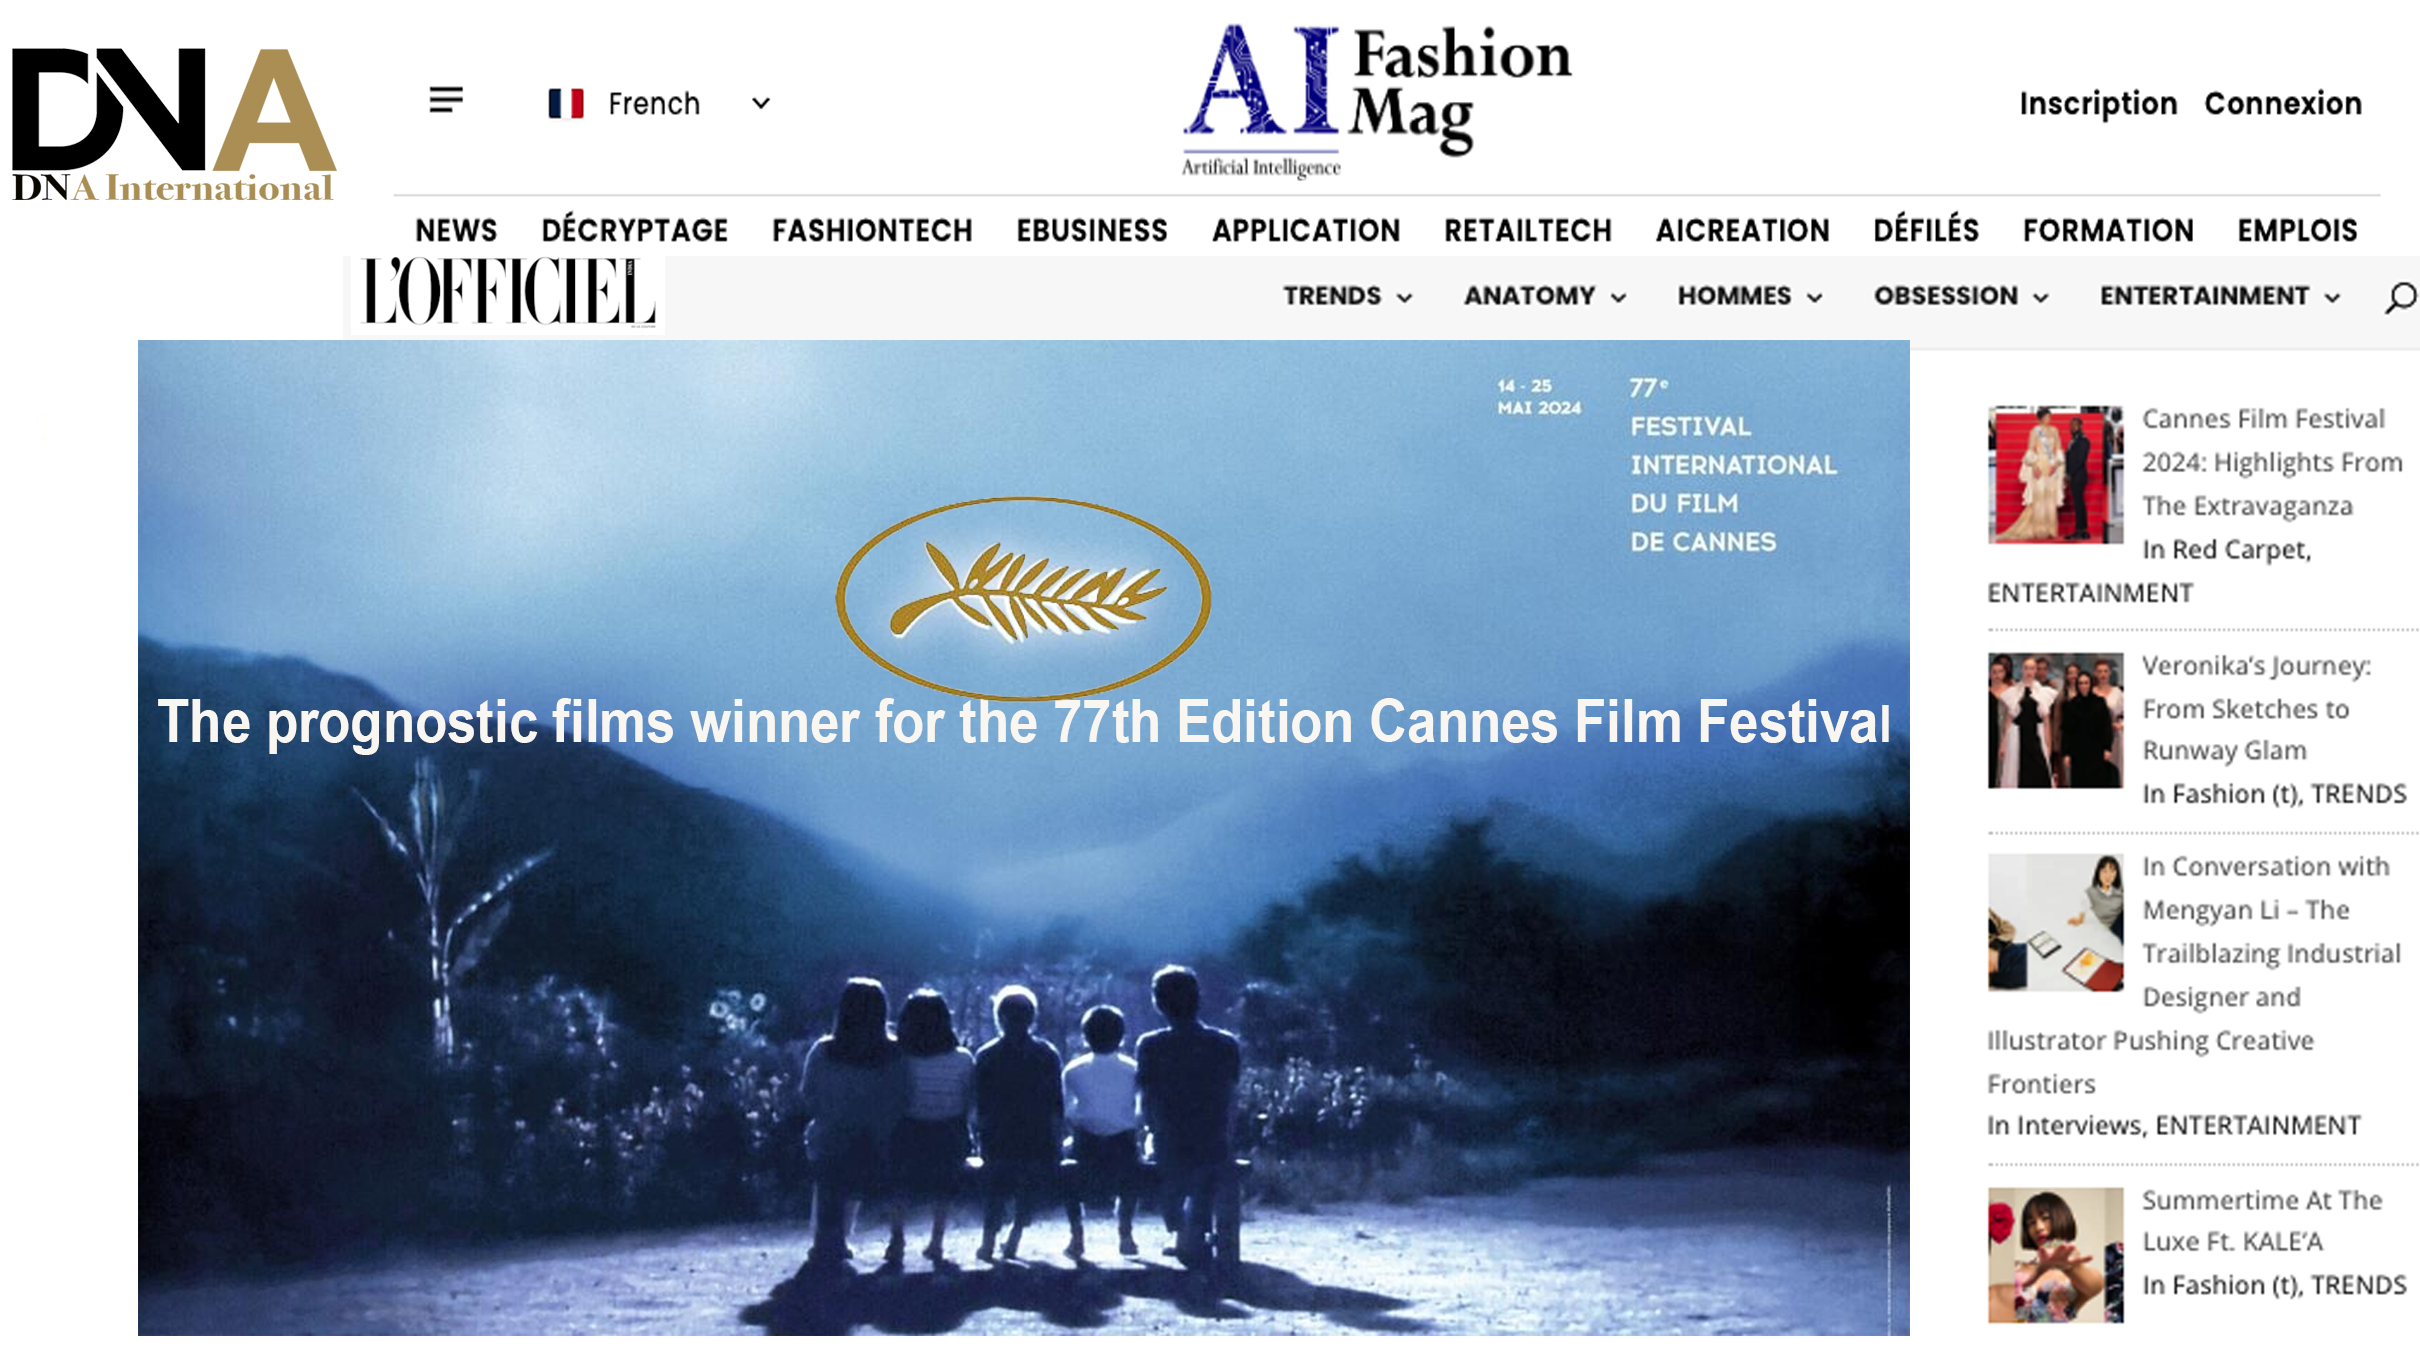 AFRICA-VOGUE-COVER-The-prognostic-films-winner-for-the-77th-Edition-Cannes-Film-Festival-DN-AFRICA-Media-Partner